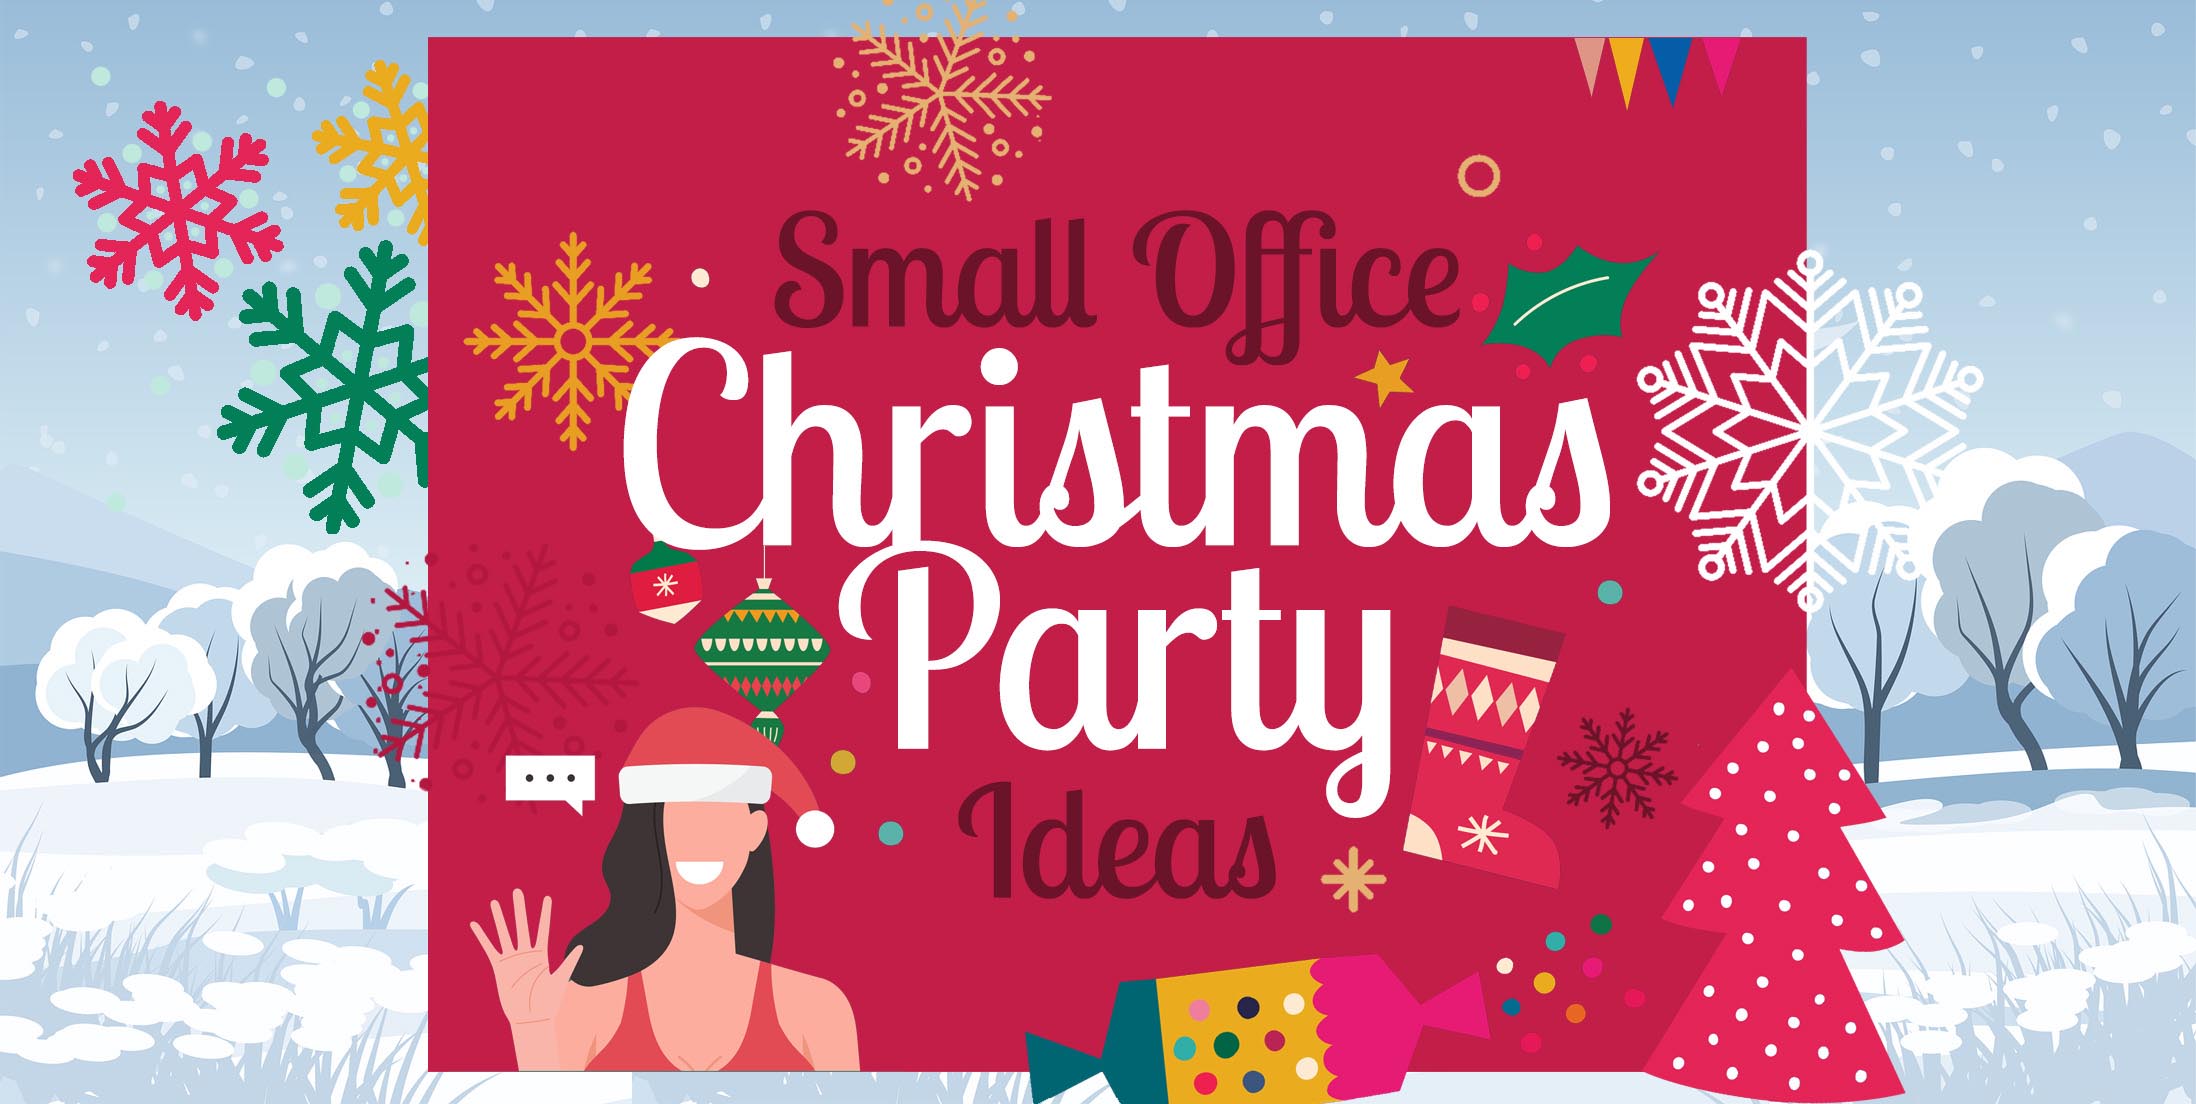 Christmas Ideas for Small Groups Fun Xmas Office Ideas